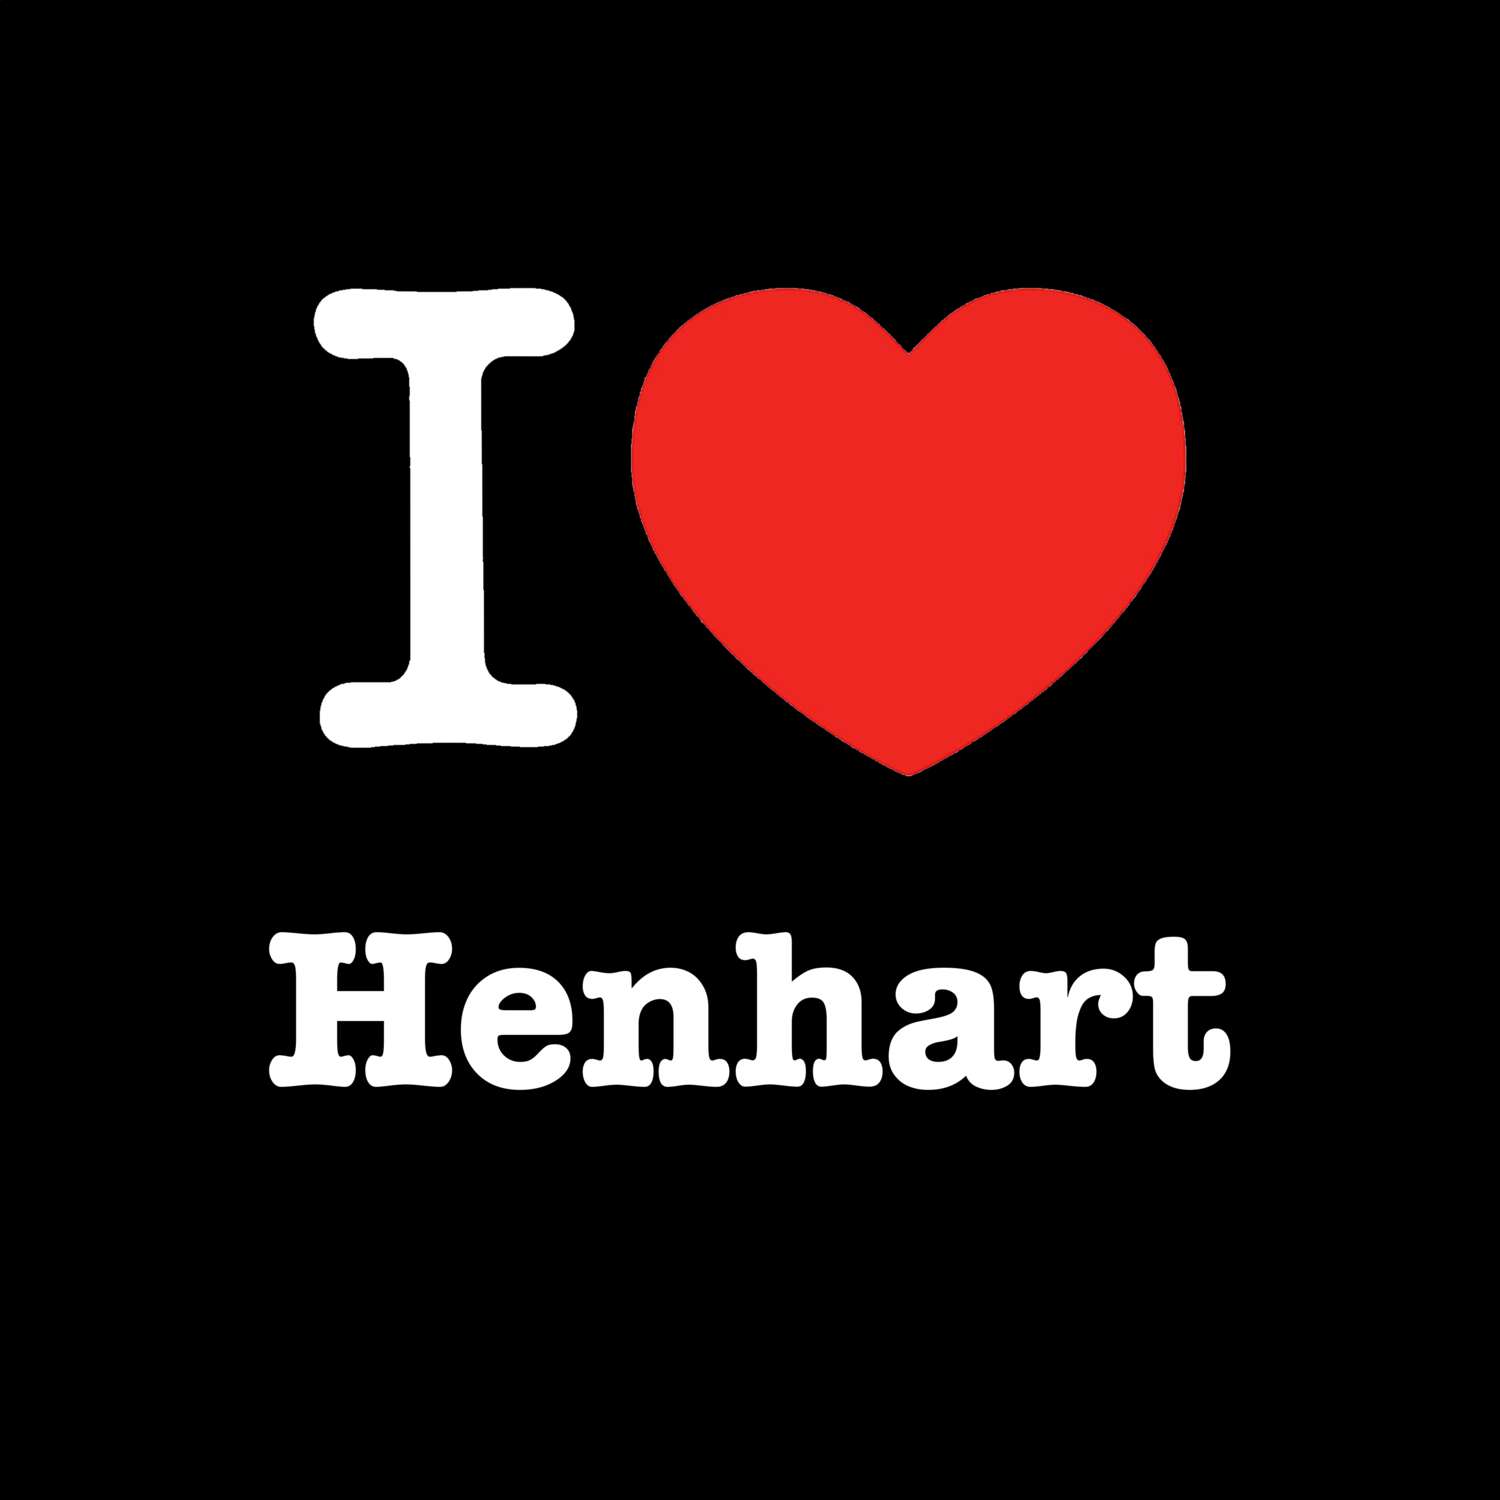 Henhart T-Shirt »I love«